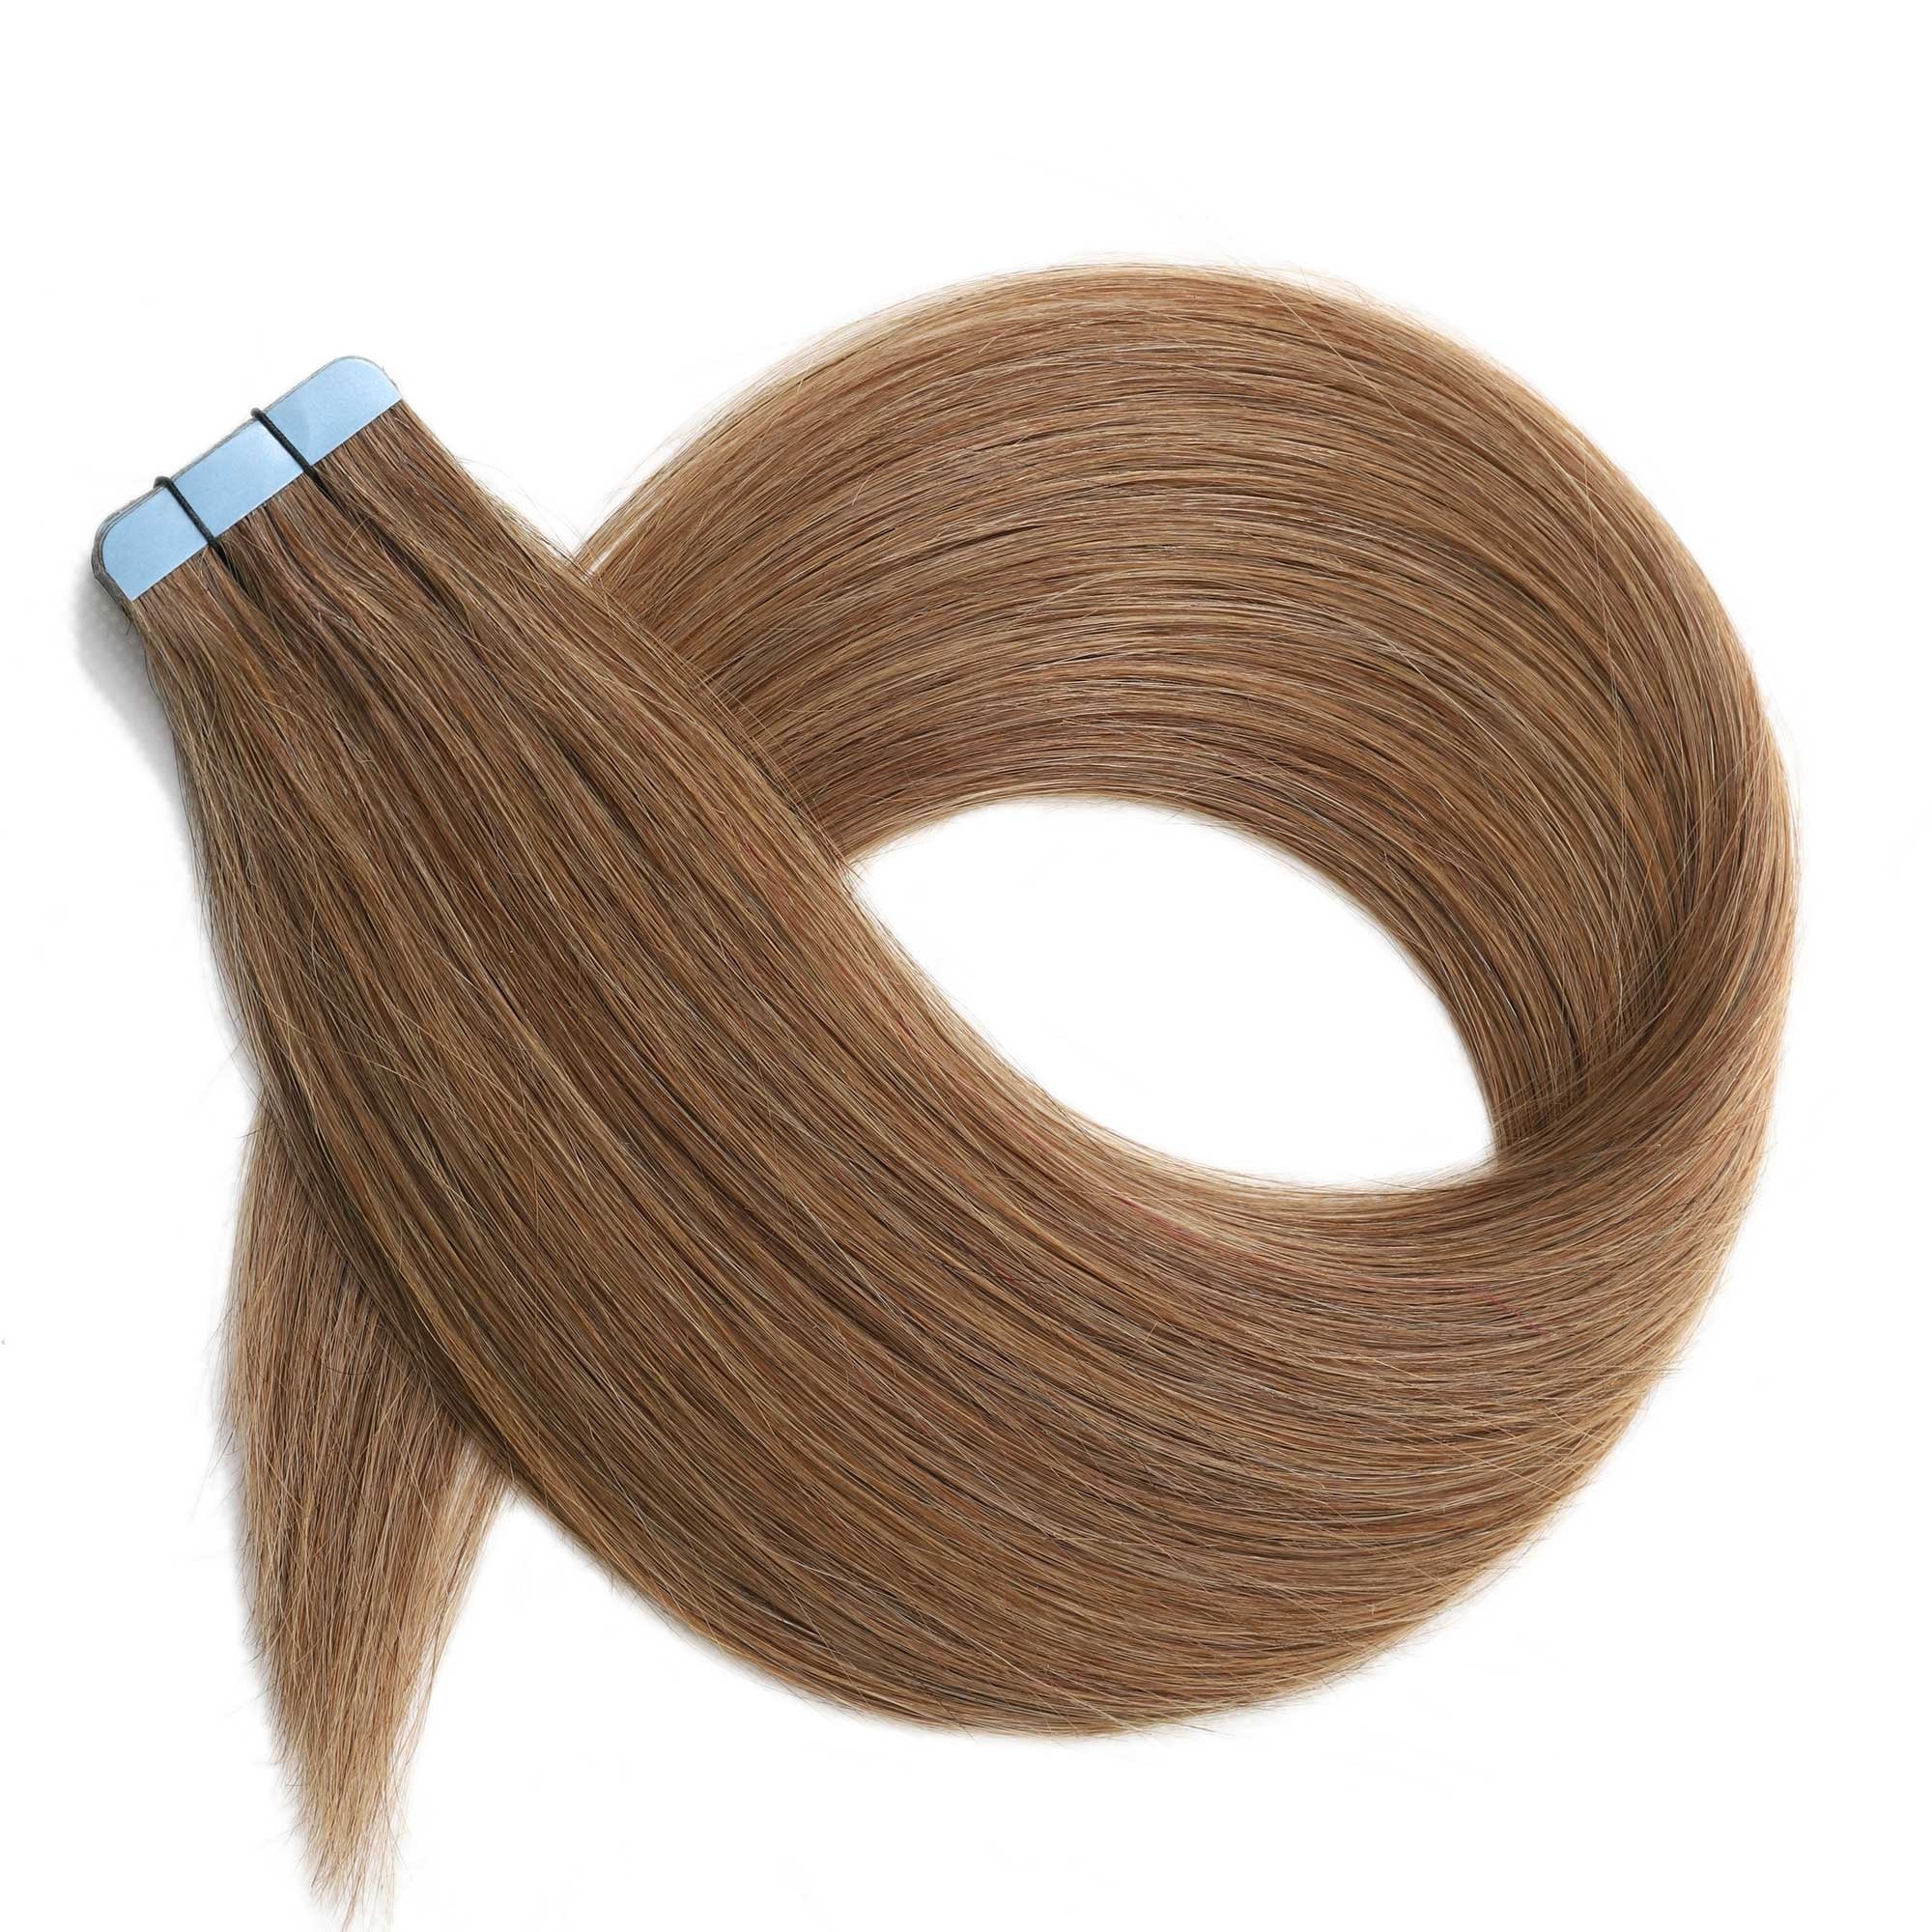 Sample Hair Extensions Colour Match #6 Medium Brown